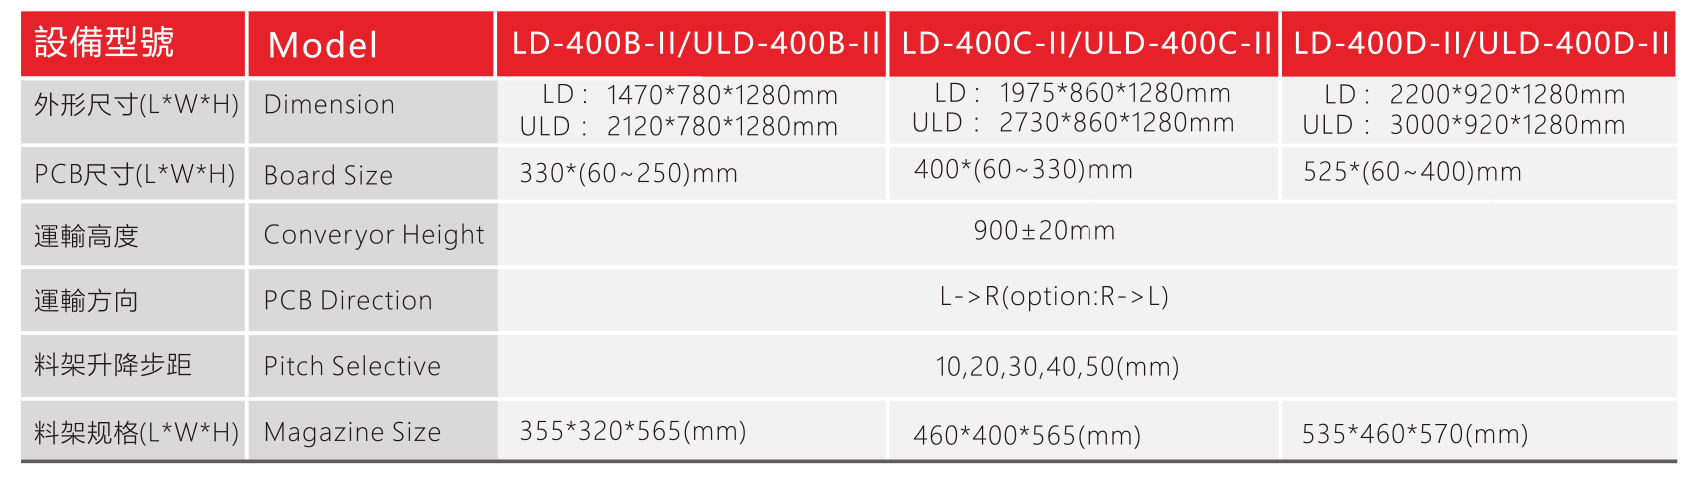 LD/ULD Series Automatic Loader/Unloader